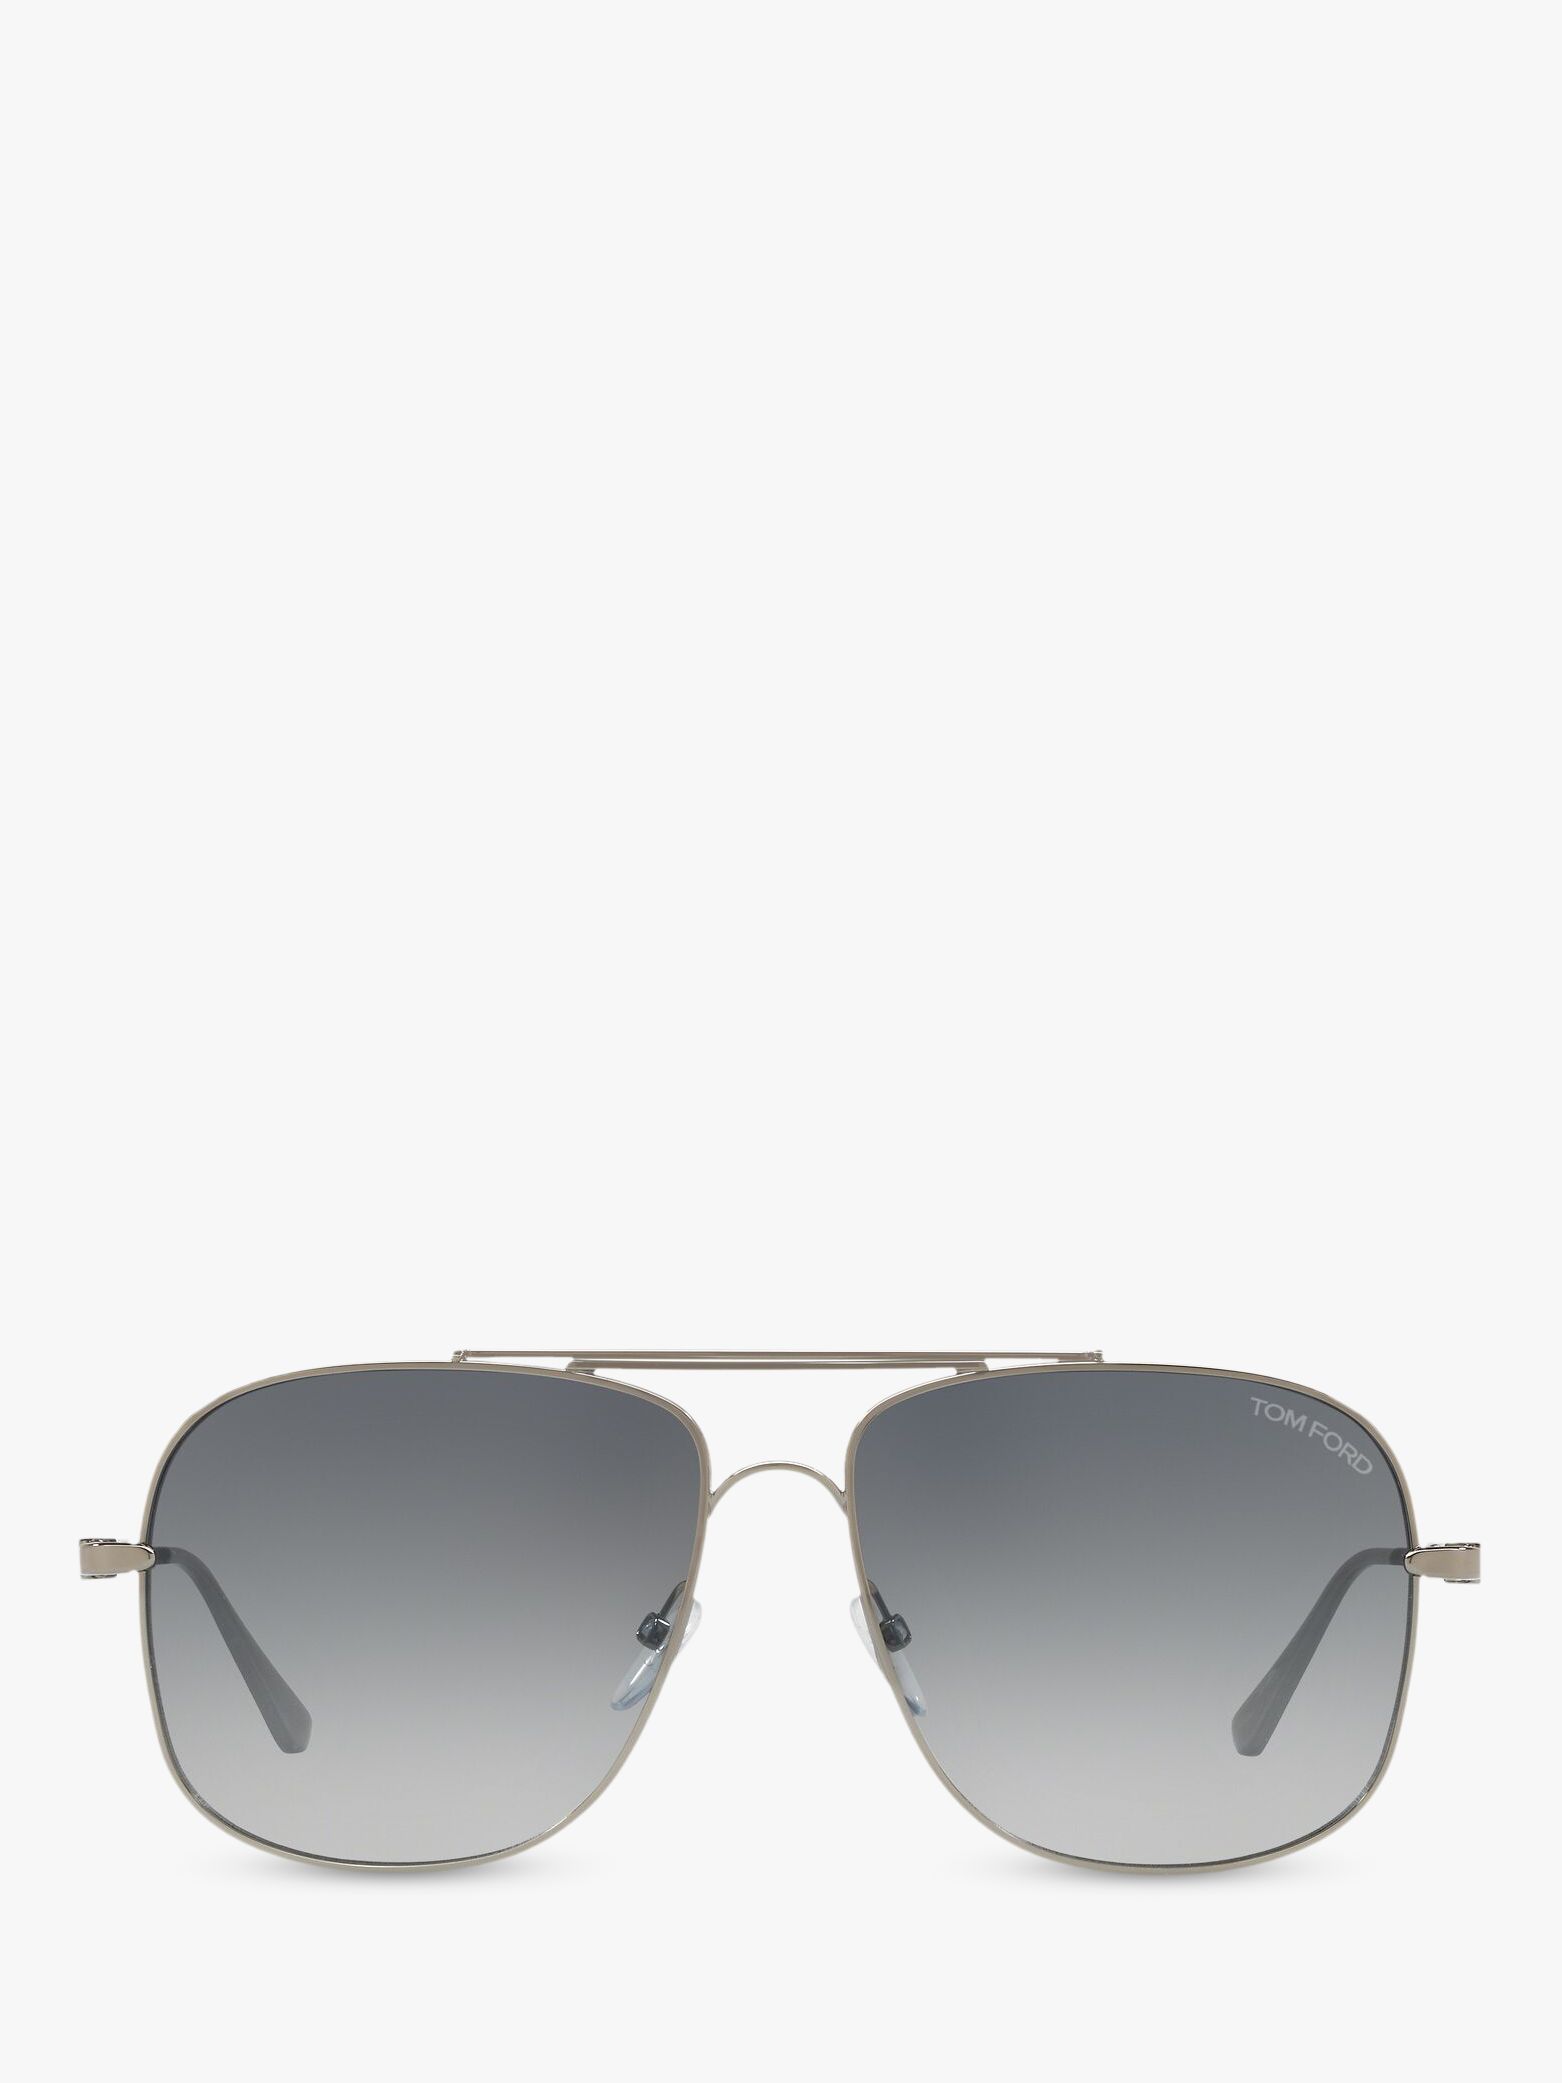 Buy TOM FORD FT0669 Men's Square Sunglasses Online at johnlewis.com